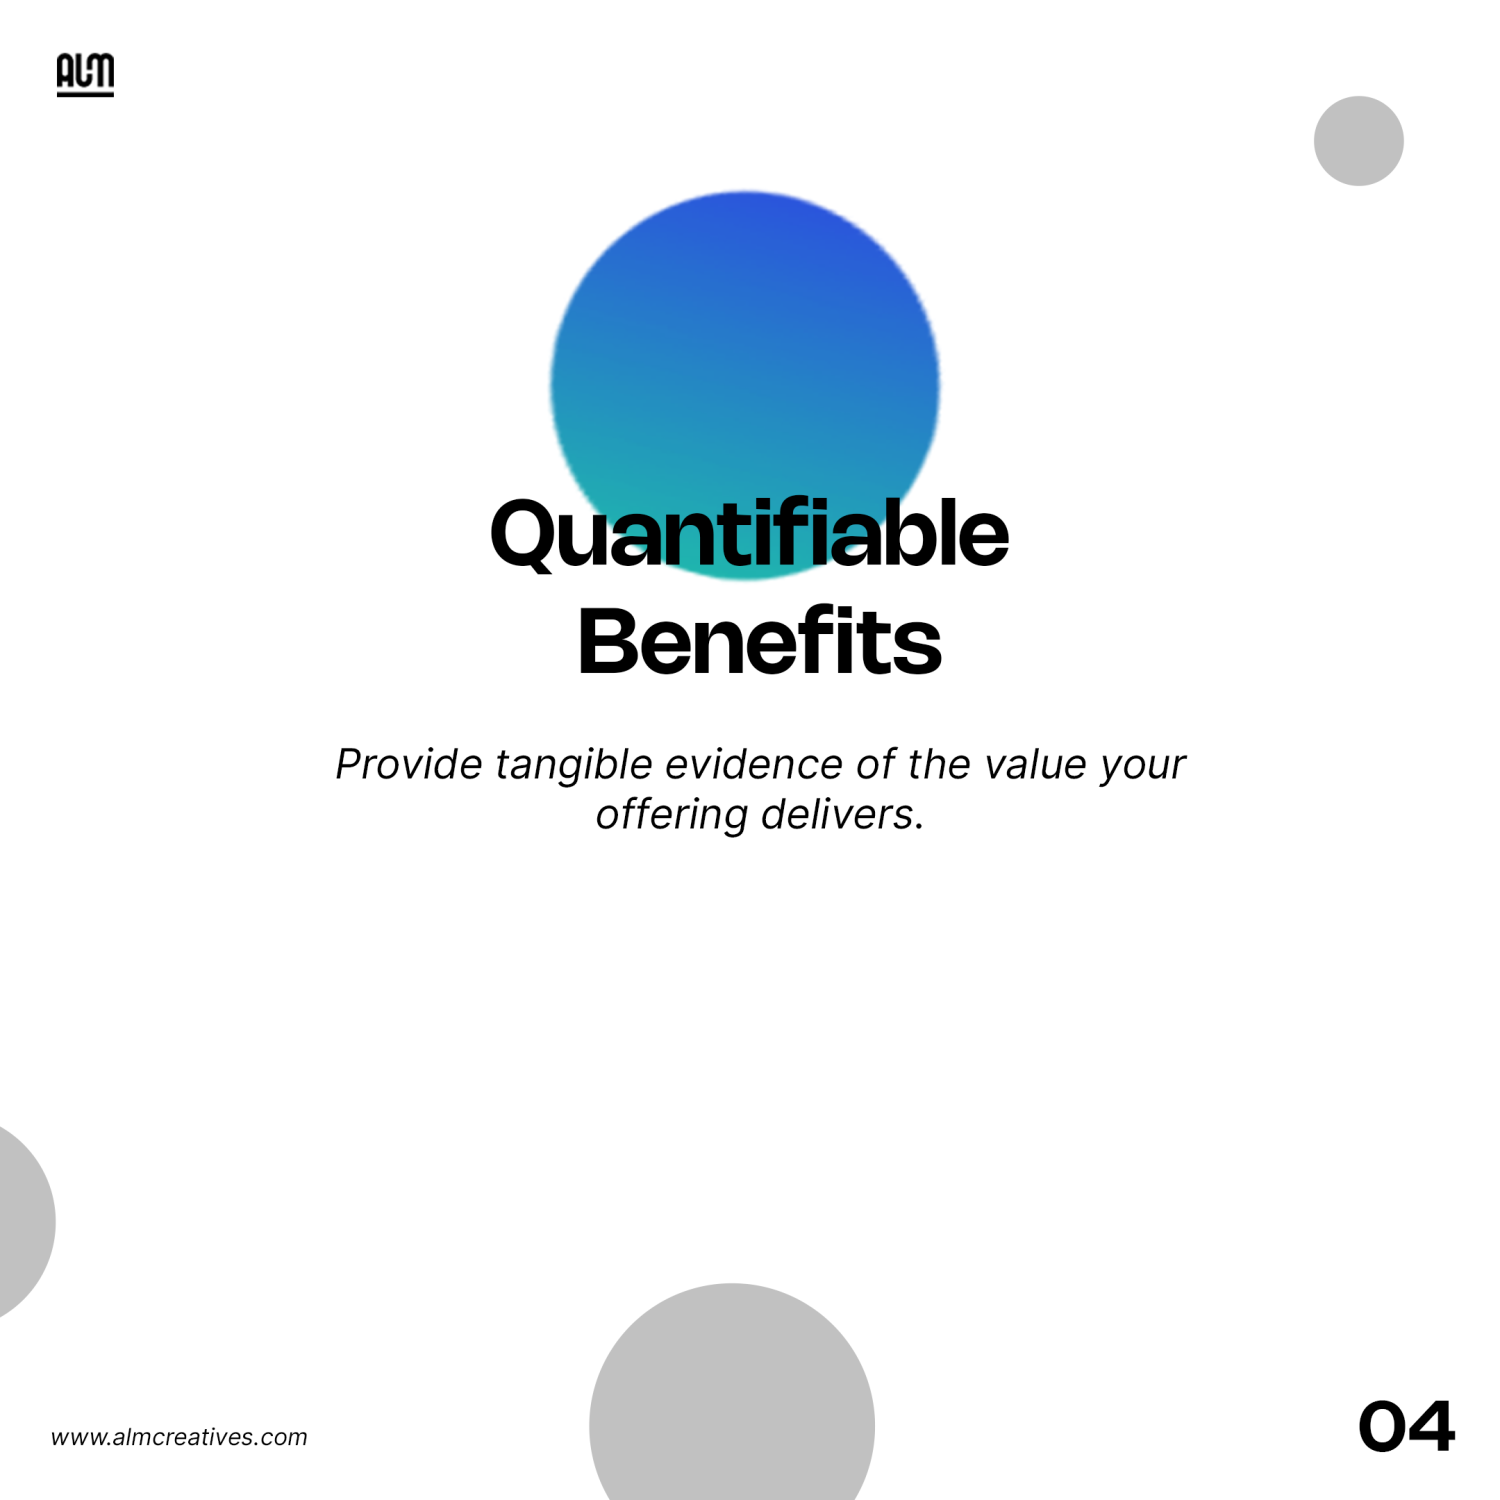 Quantifiable Benefits